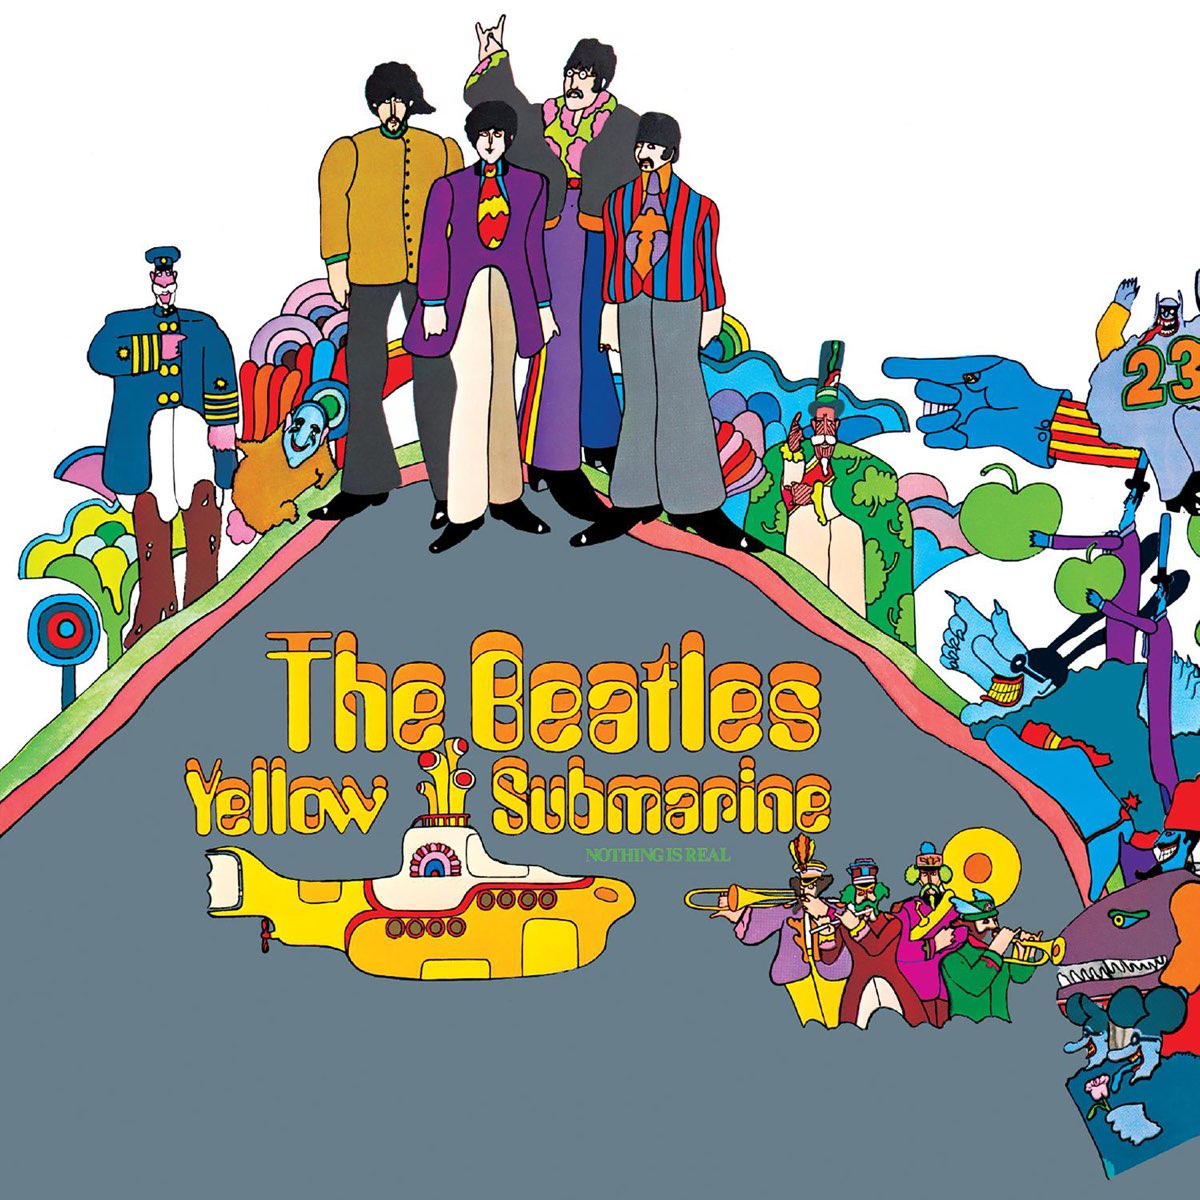 The Beatles Yellow Submarine cover artwork